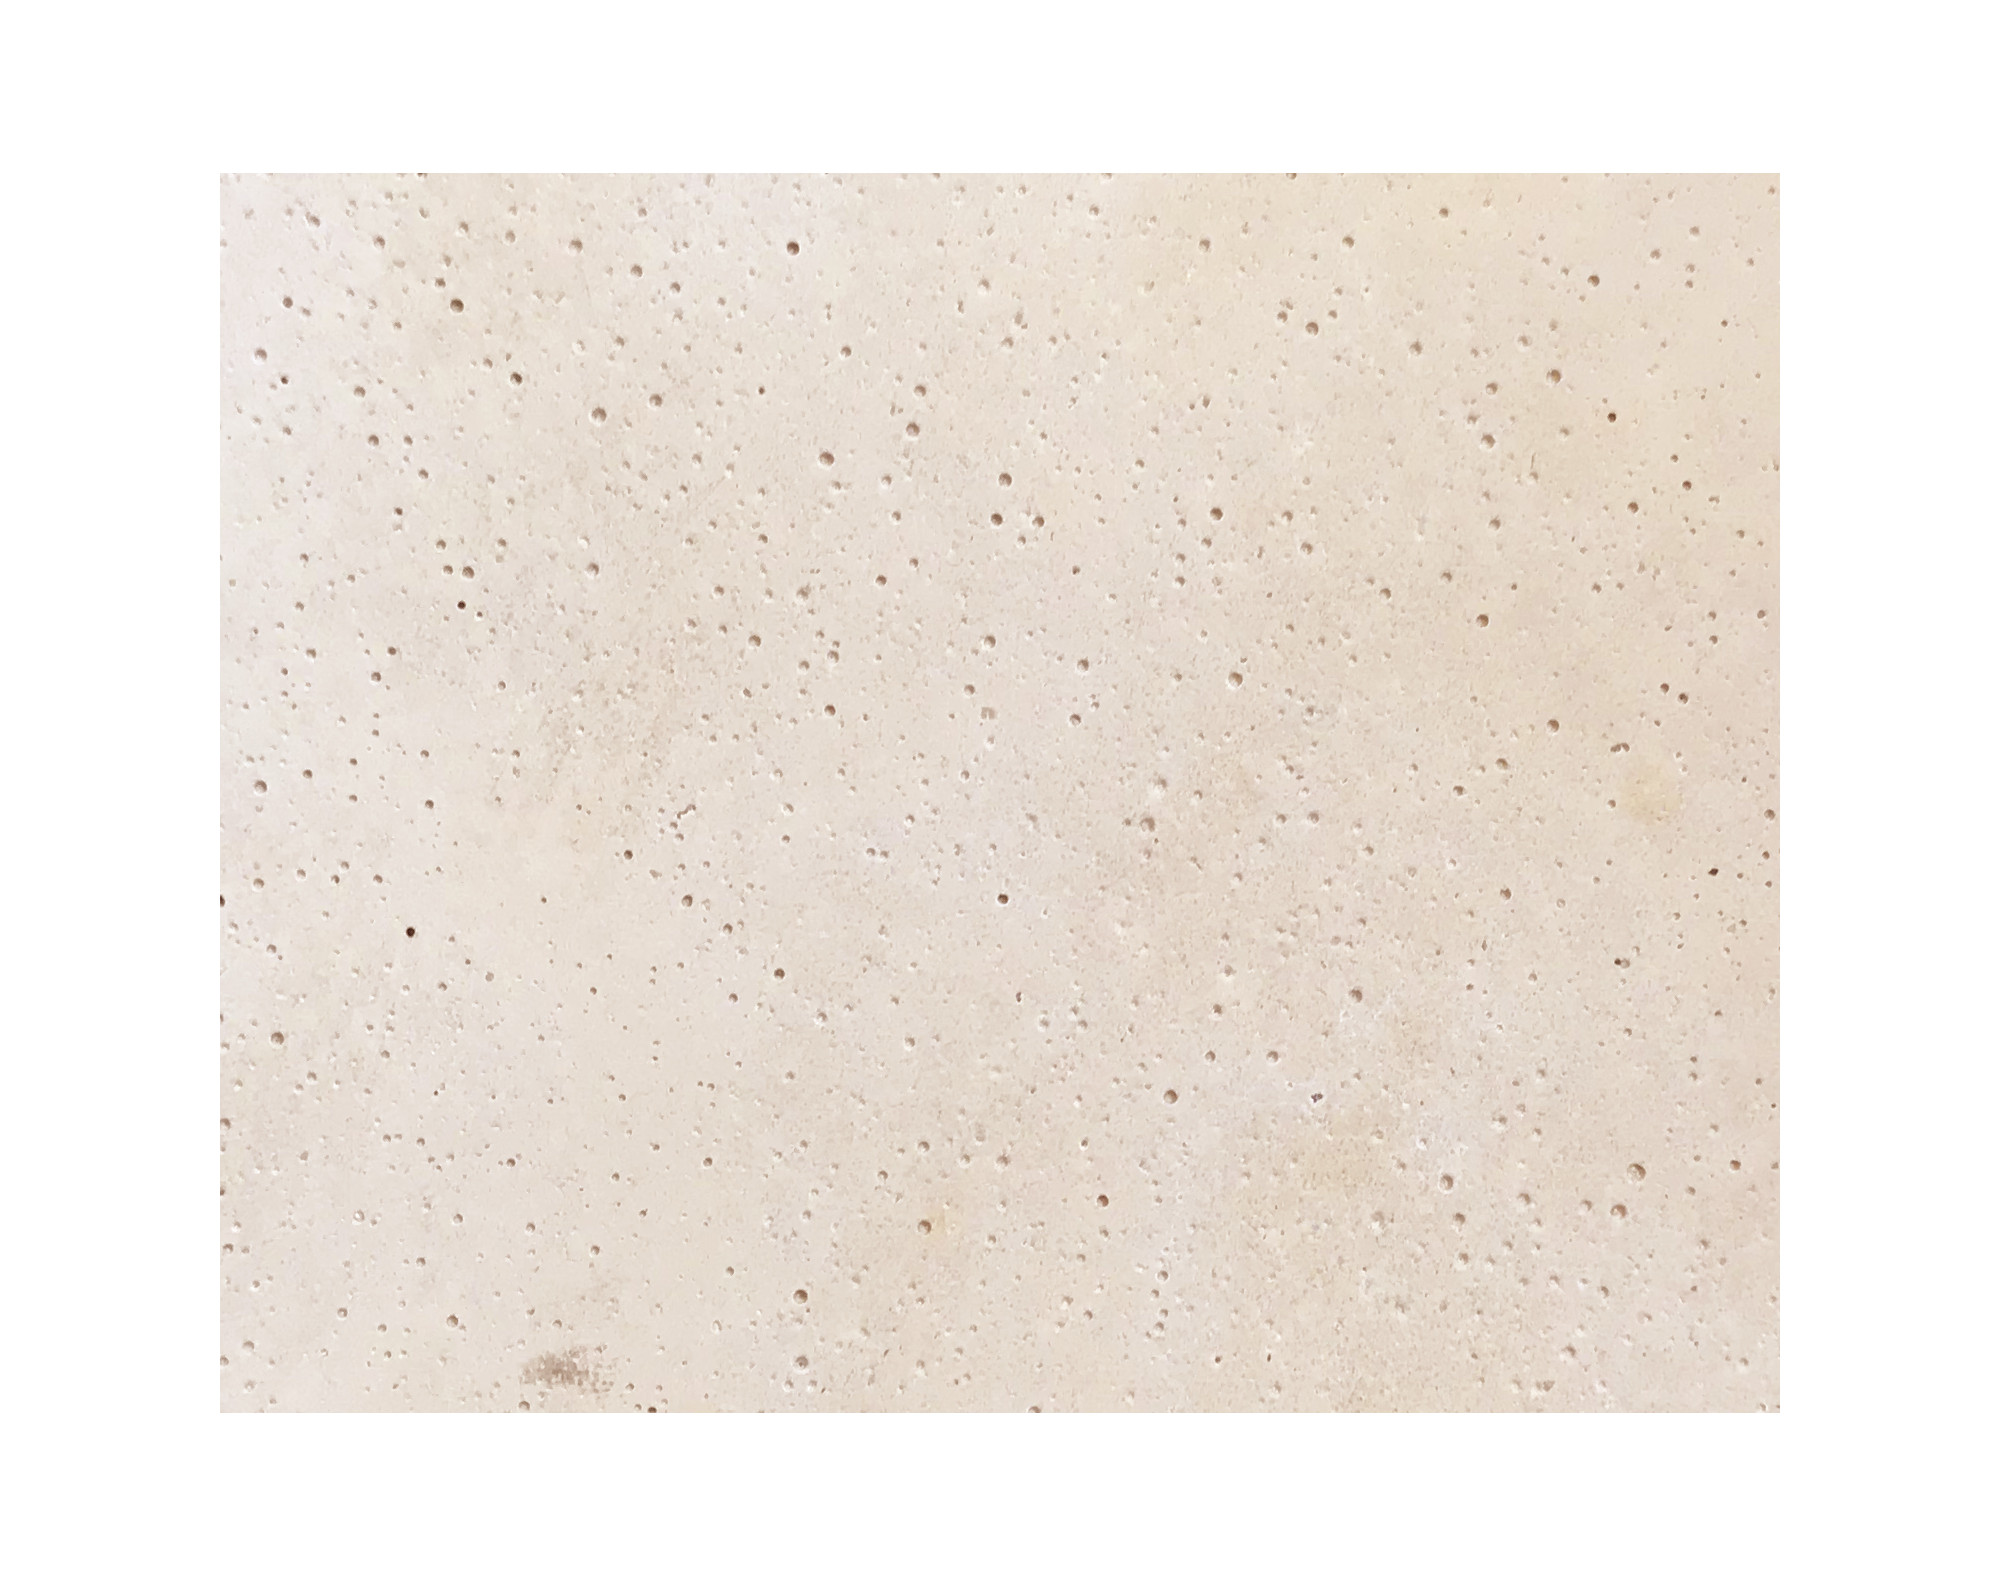 Harmo roc romaset, olympia-serie, ovaal d: 6,00mx11,30m, indisch beige, beton